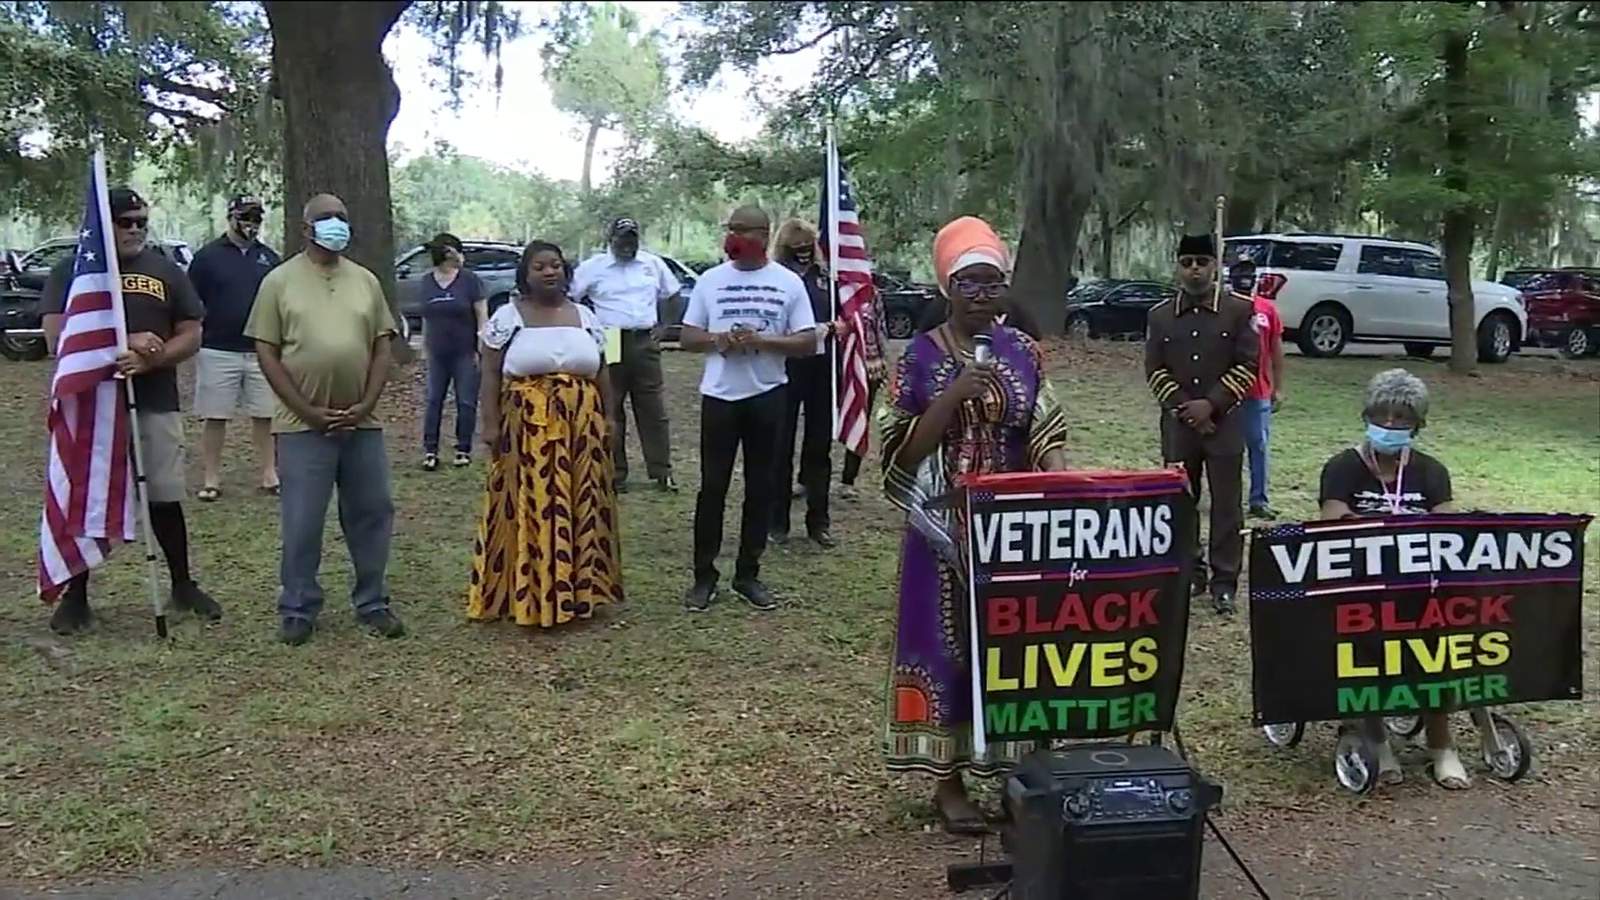 Veterans for Black Lives Matters group organizes on Juneteenth